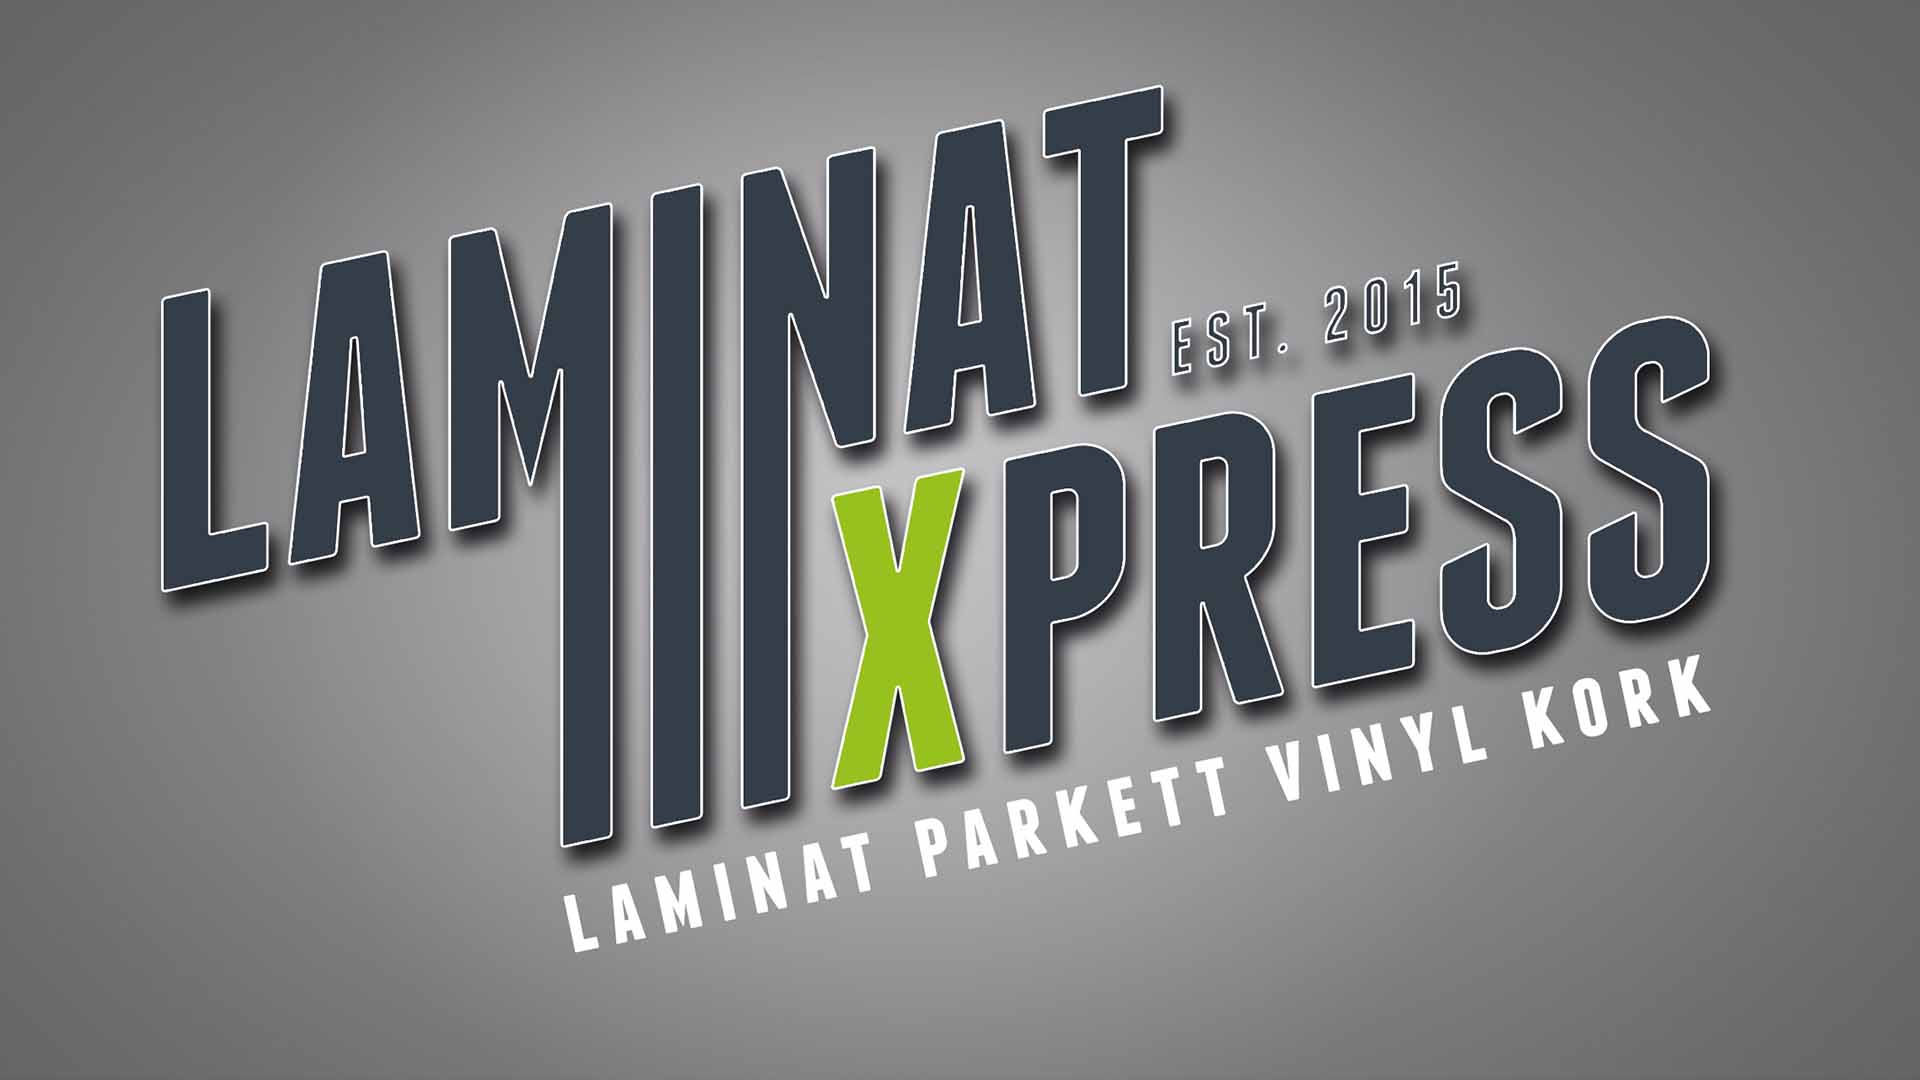 Laminatexpress